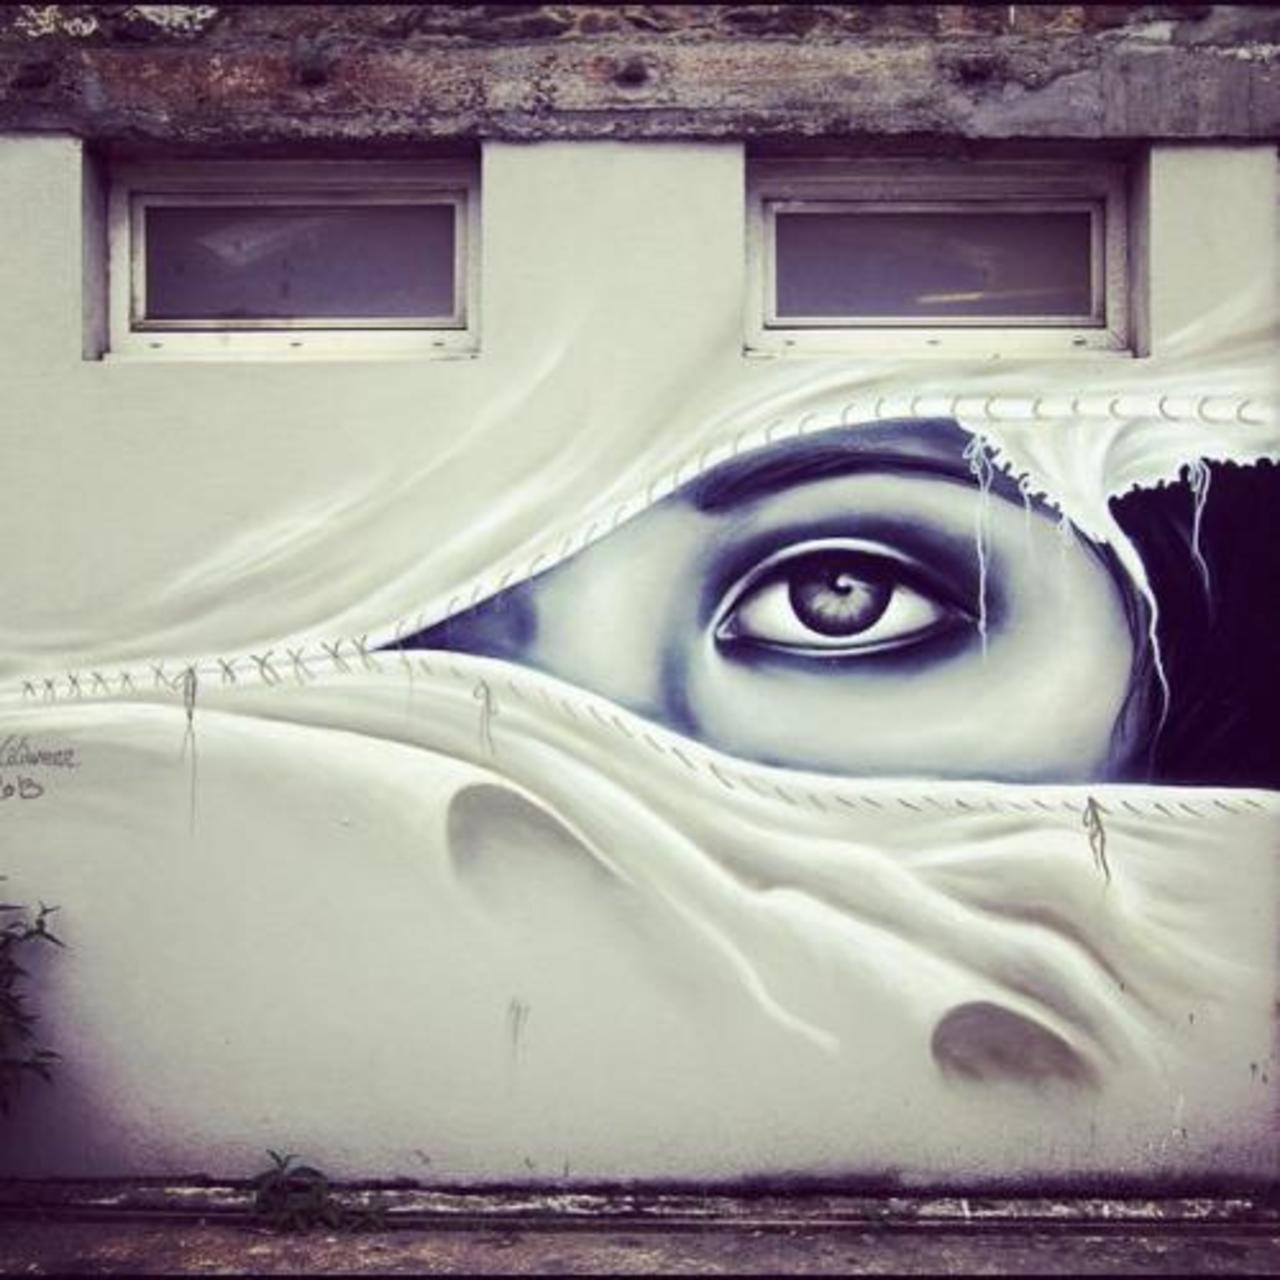 ##Streetart ##Sprayart ##Stencil ##Graffiti ... - #Mural - #ZangArt #Showcase - http://bit.ly/1F3biIM http://t.co/oCbOgfzzWy